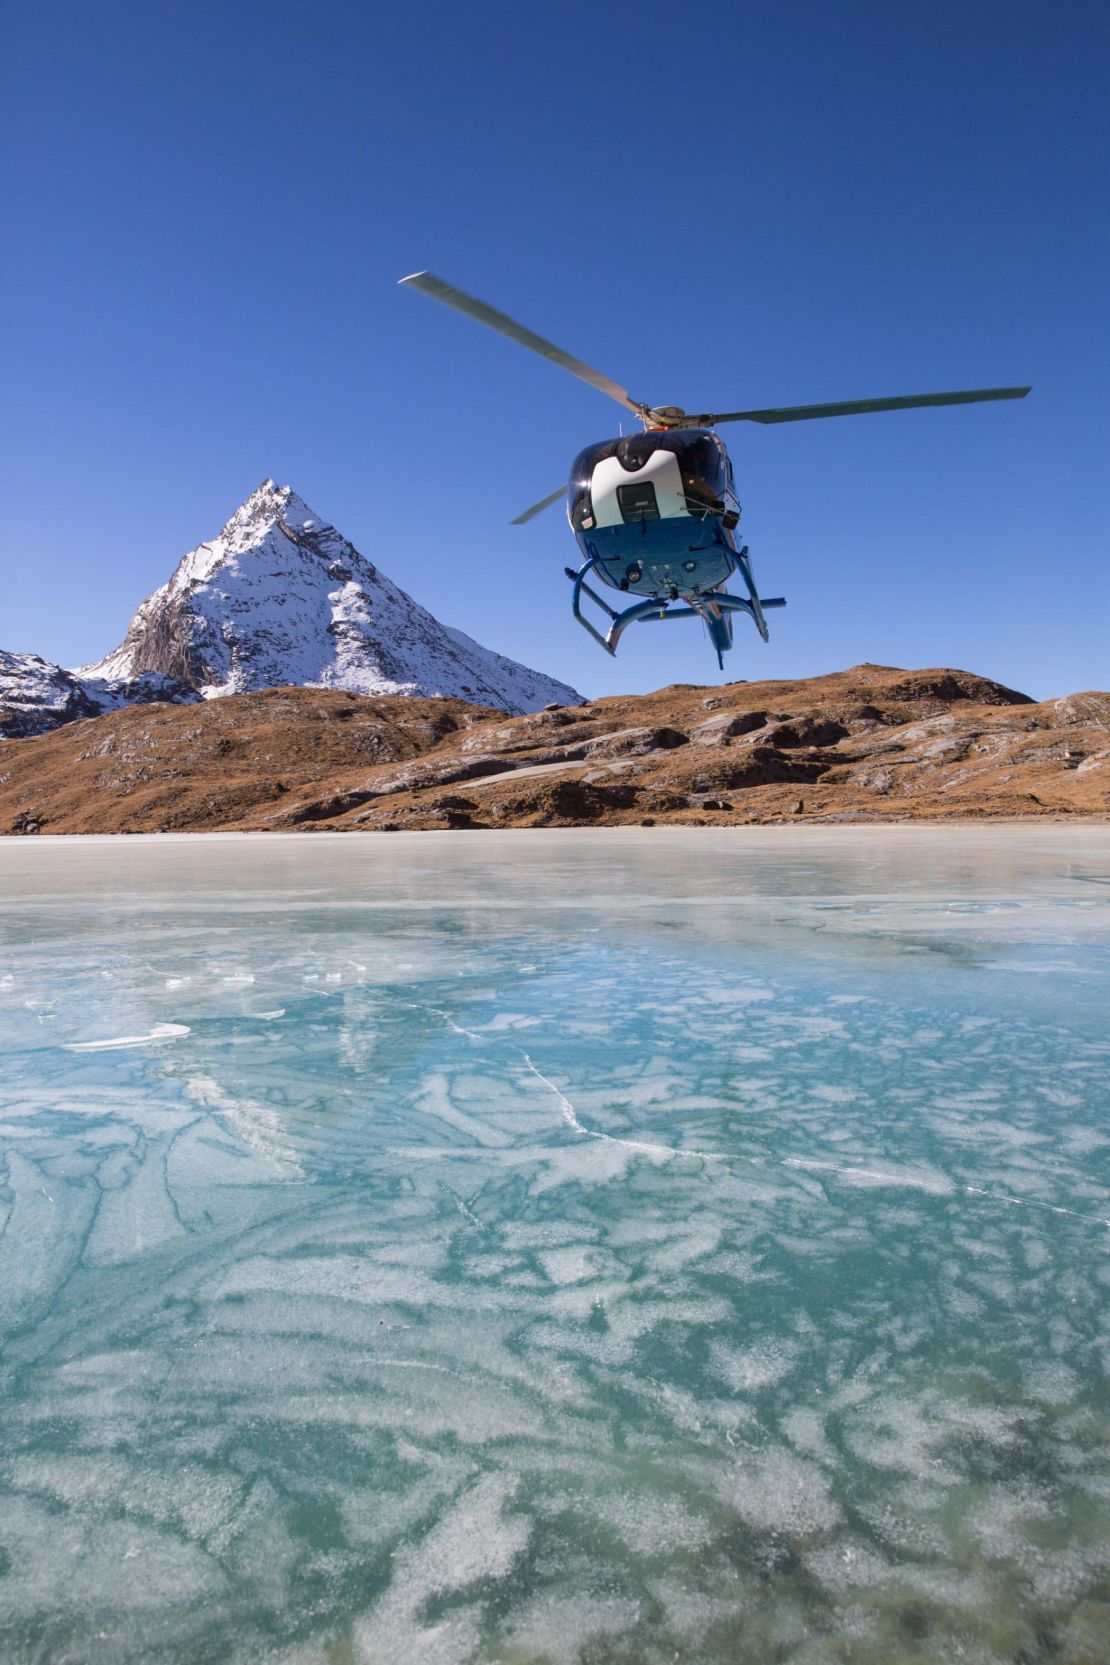 You can access far-flung valleys via helicopter in Bhutan.